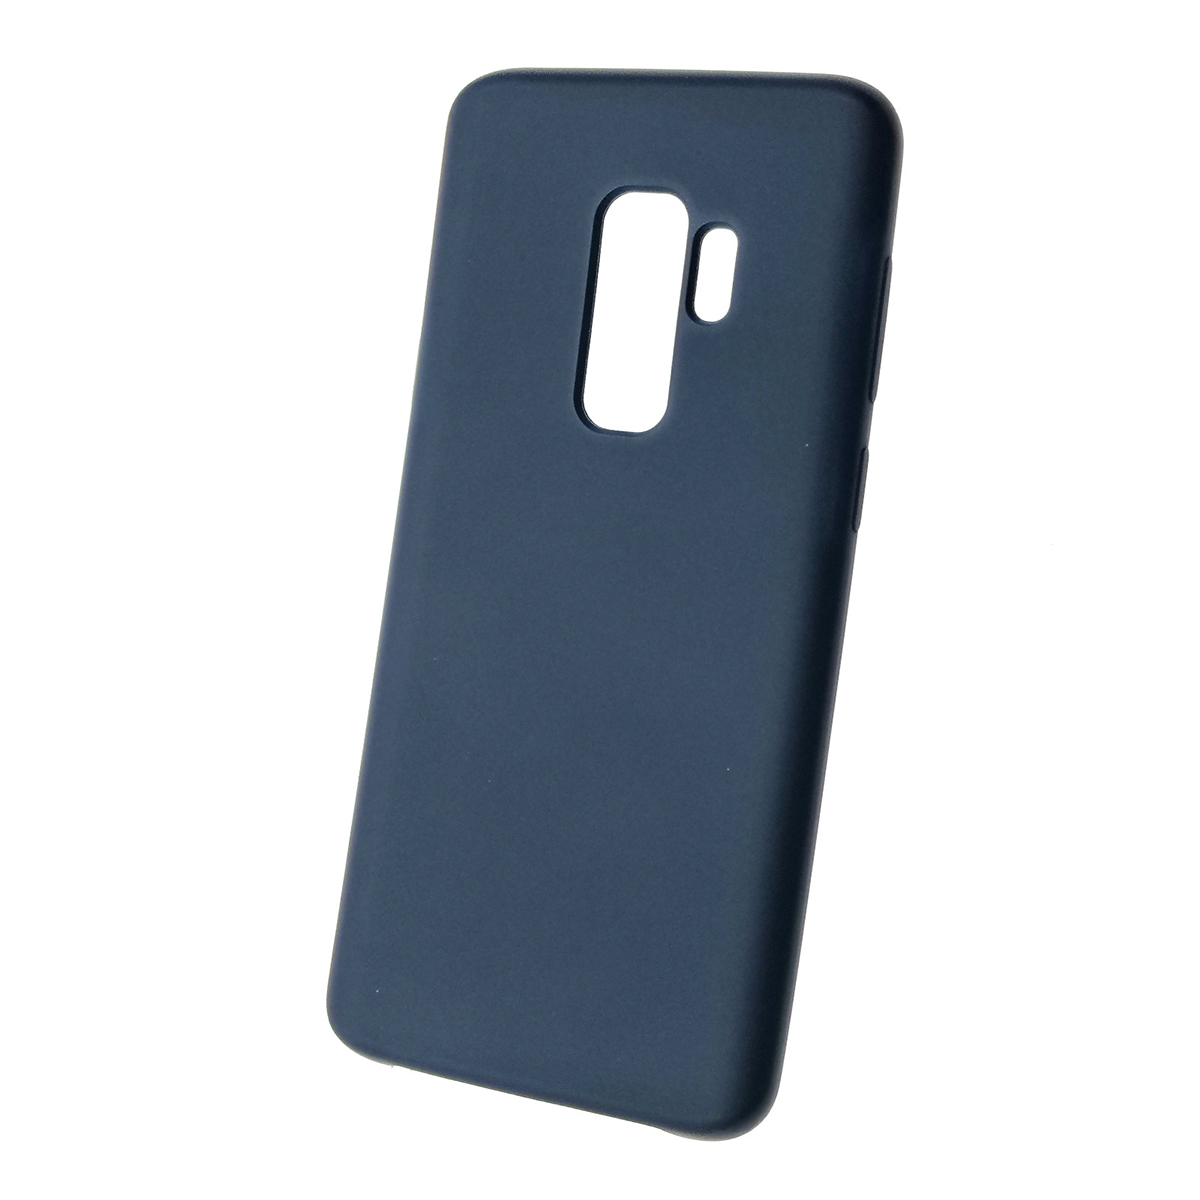 Чехол накладка Silicon Cover для SAMSUNG Galaxy S9 Plus (SM-G965), силикон, бархат, цвет синий кобальт.